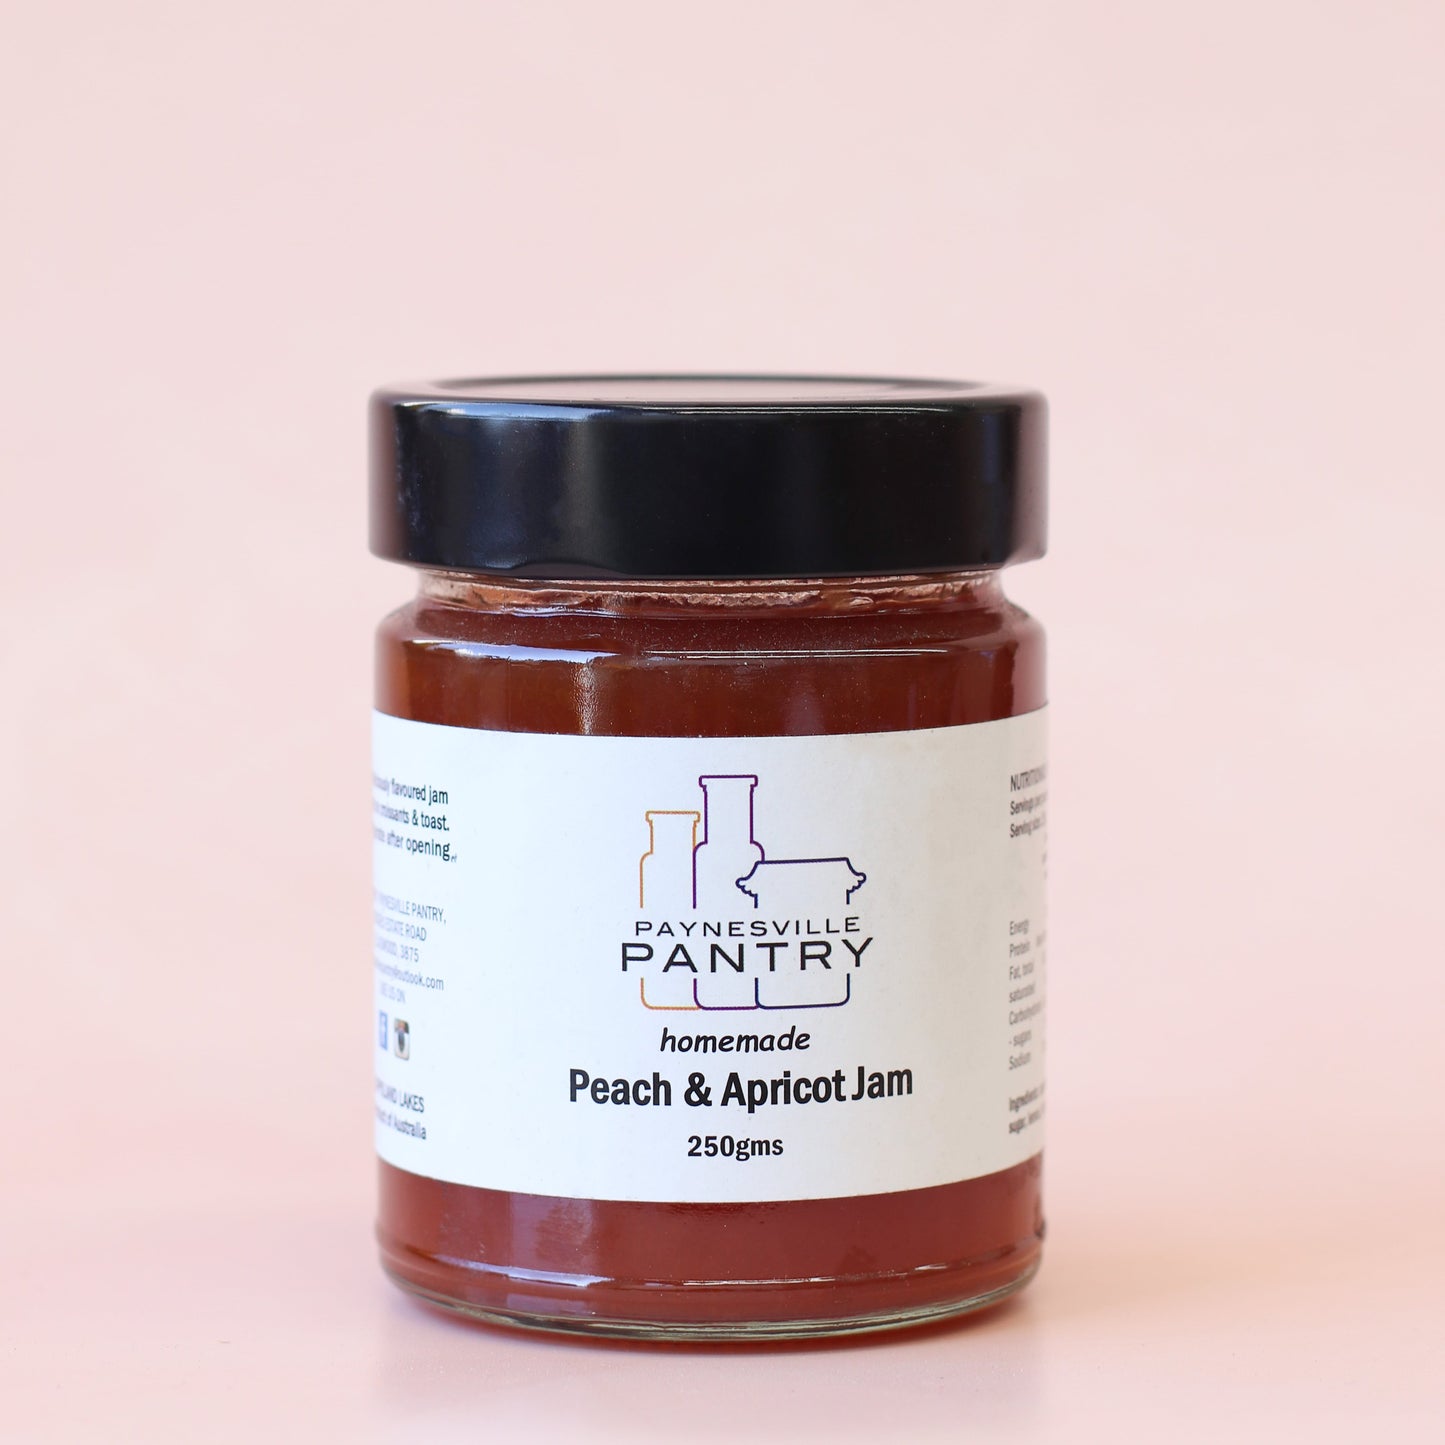 Paynesville Pantry Peach & Apricot Jam 250g